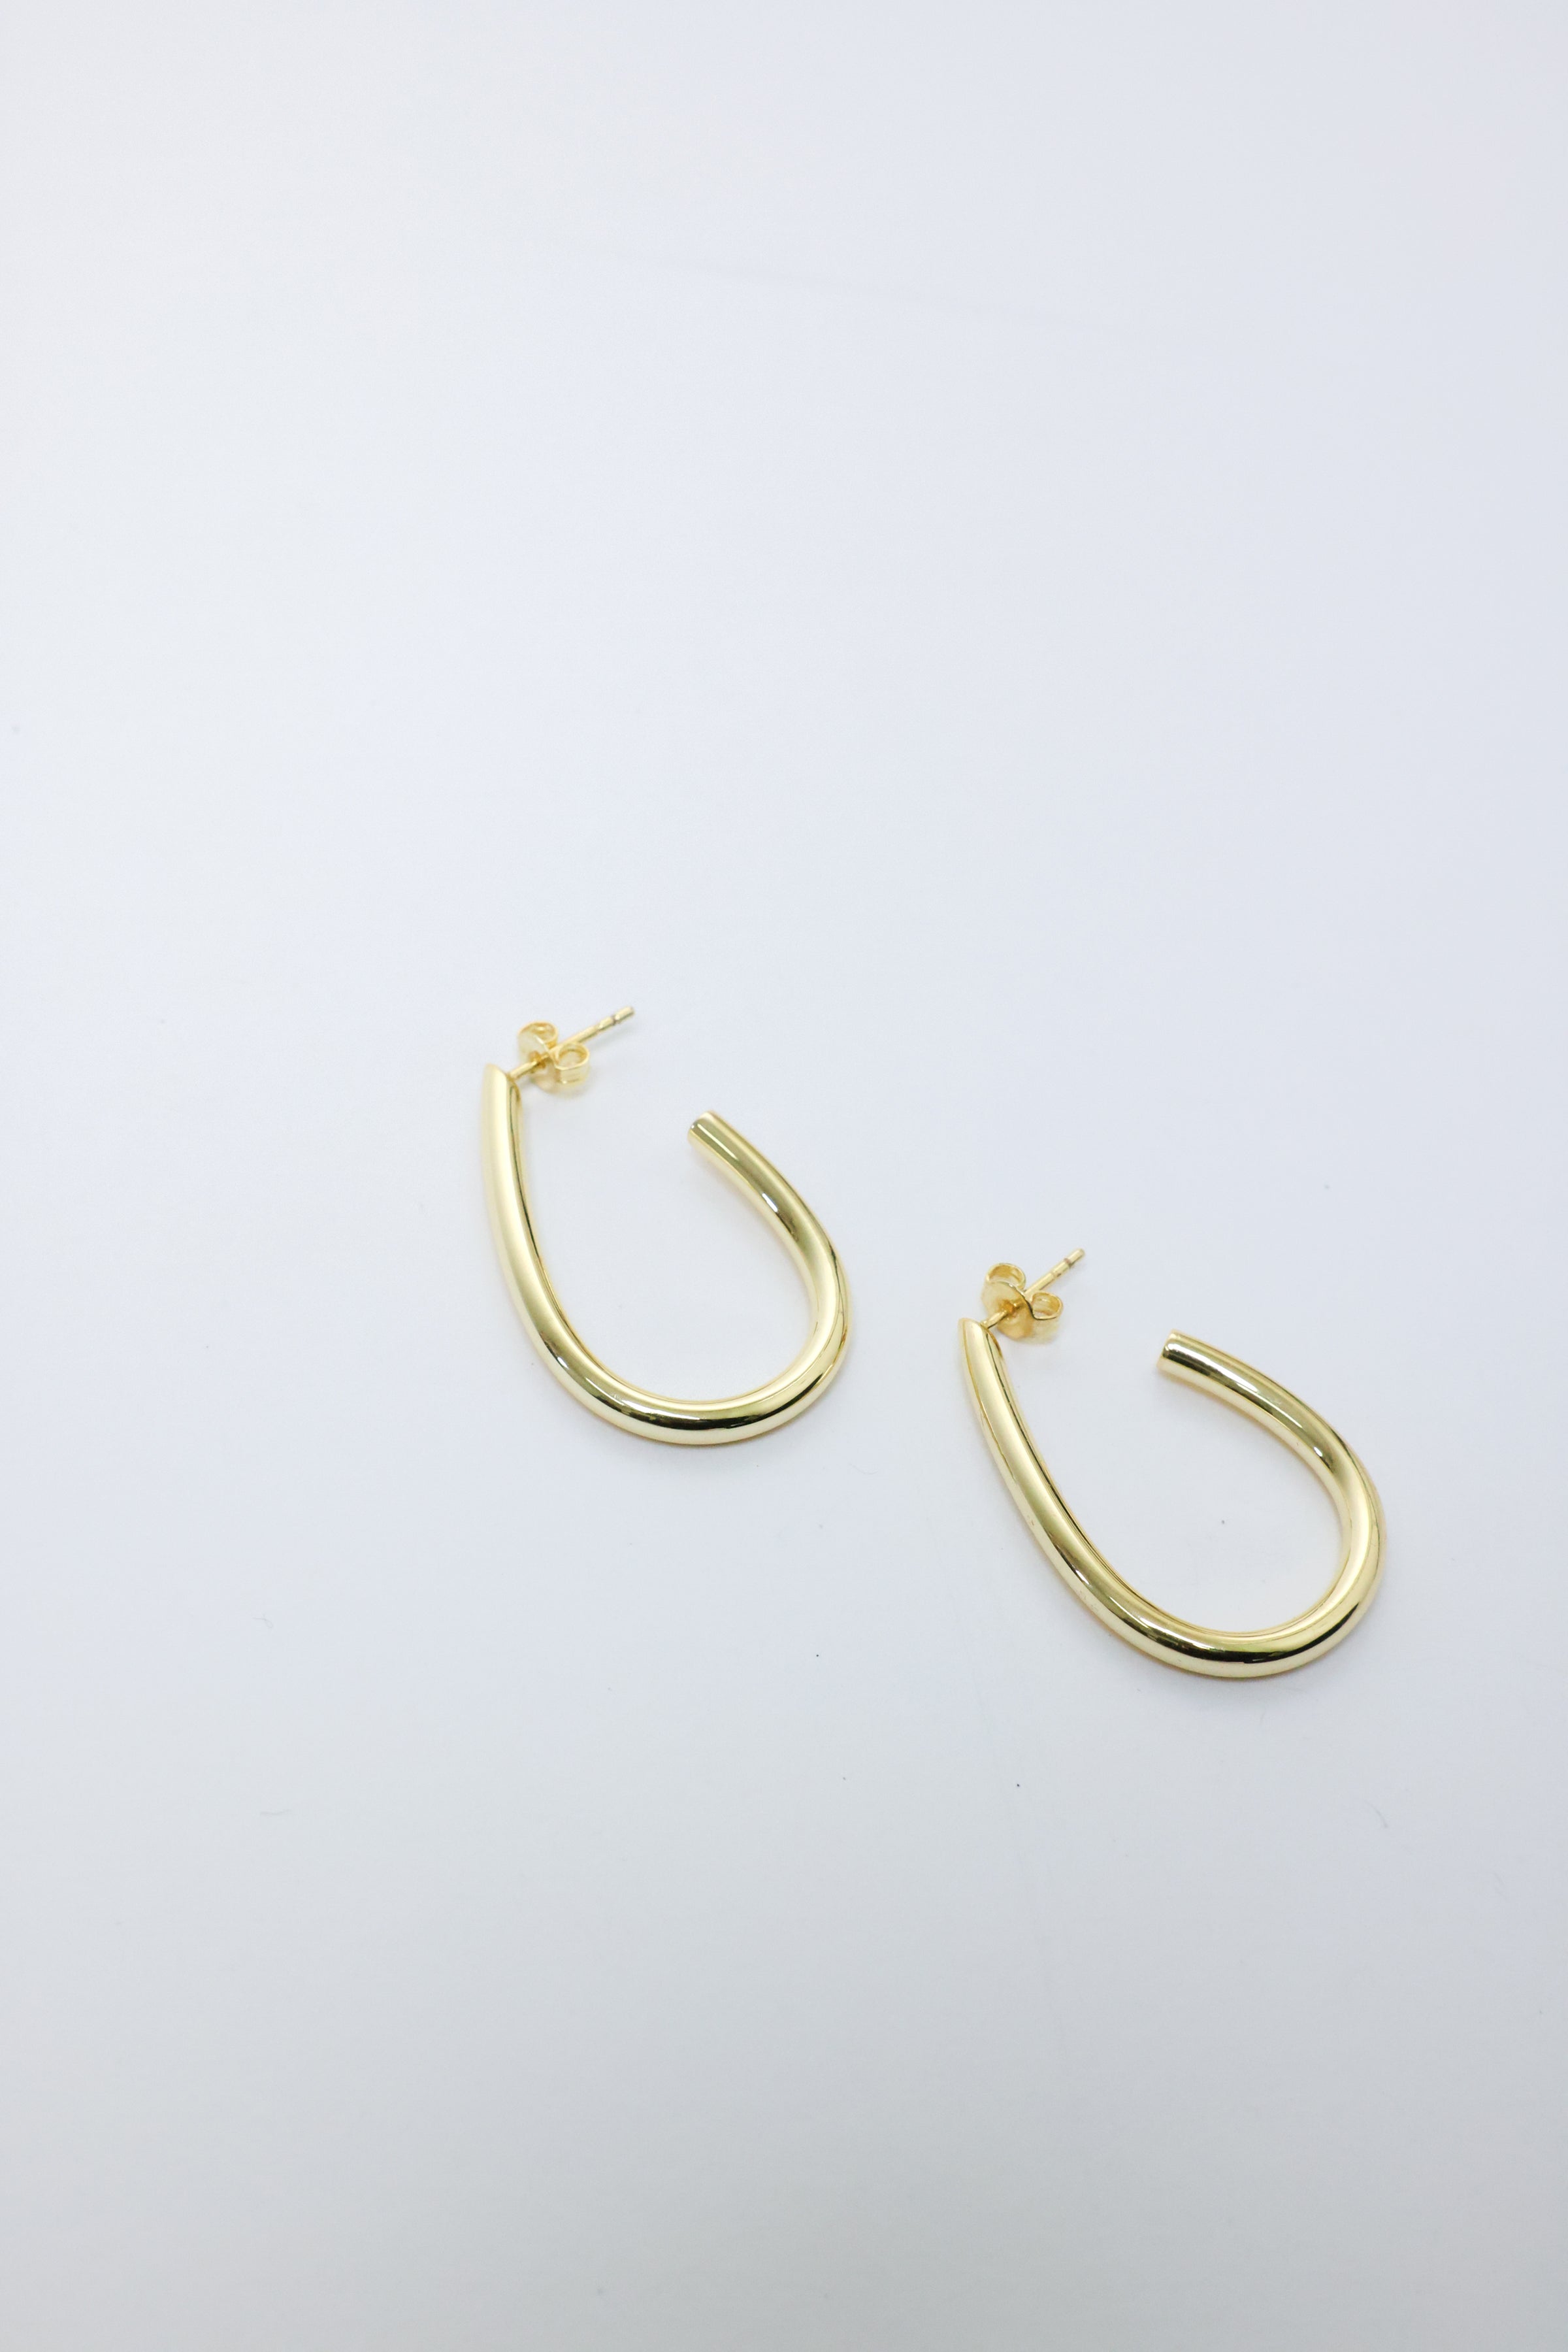 PG Designs Oval Shaped Tube Earrings